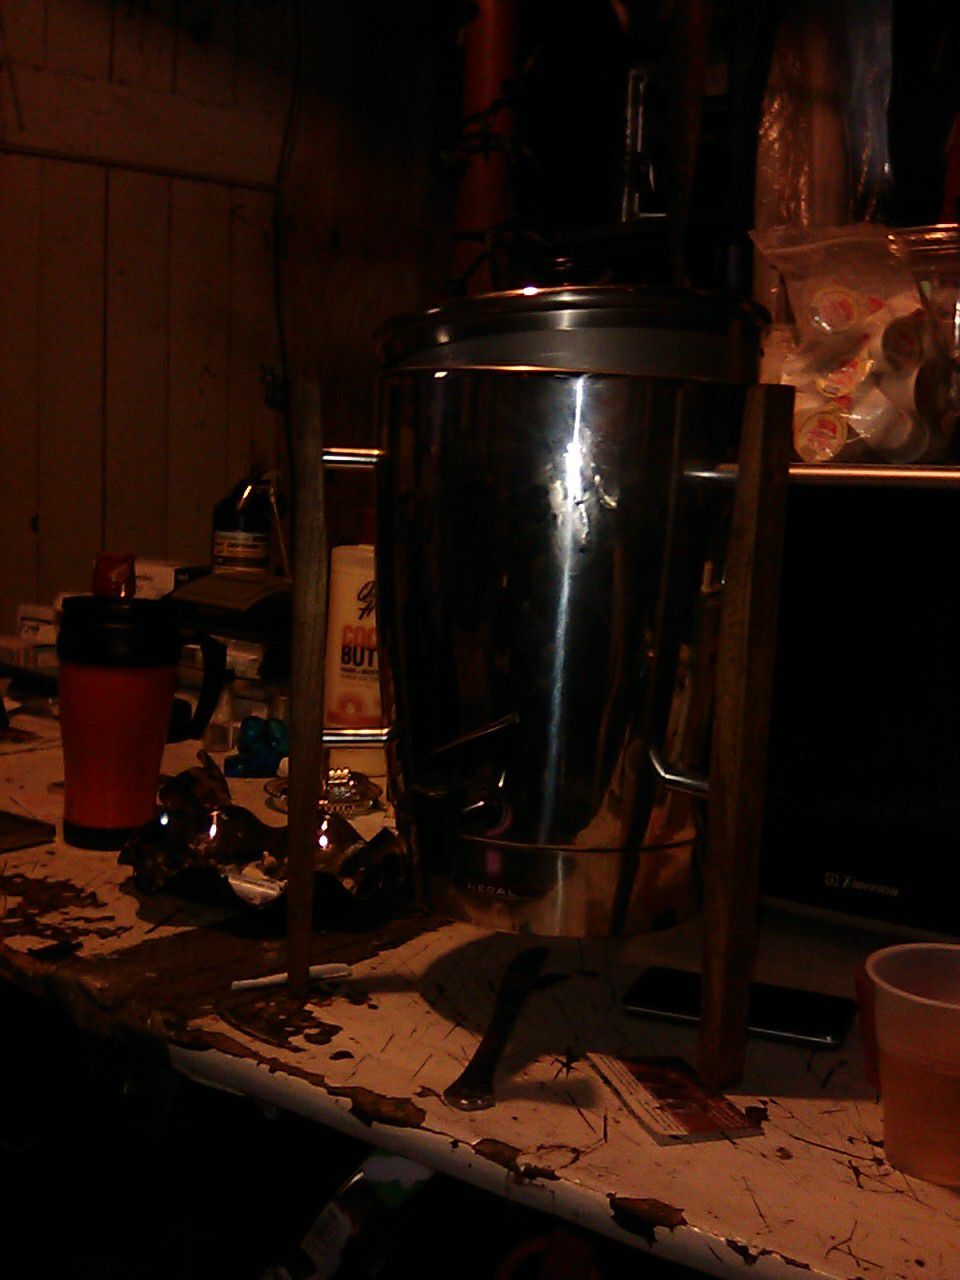 Stainless Steel Regal Coffee Maker